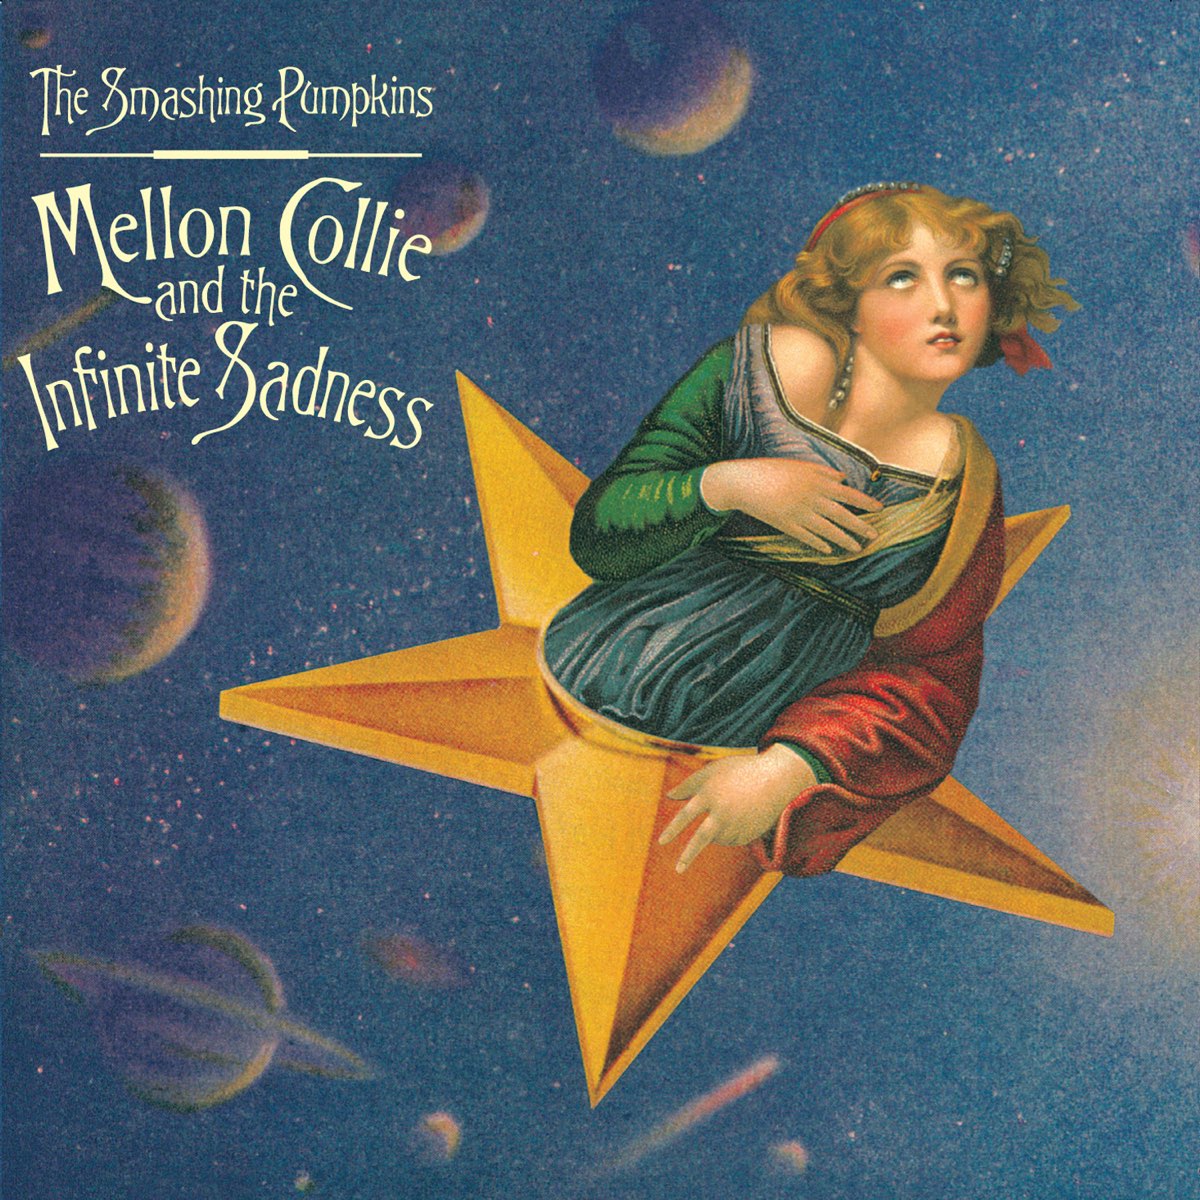 "Mellon Collie and the Infinite Sadness" by Smashing Pumpkins